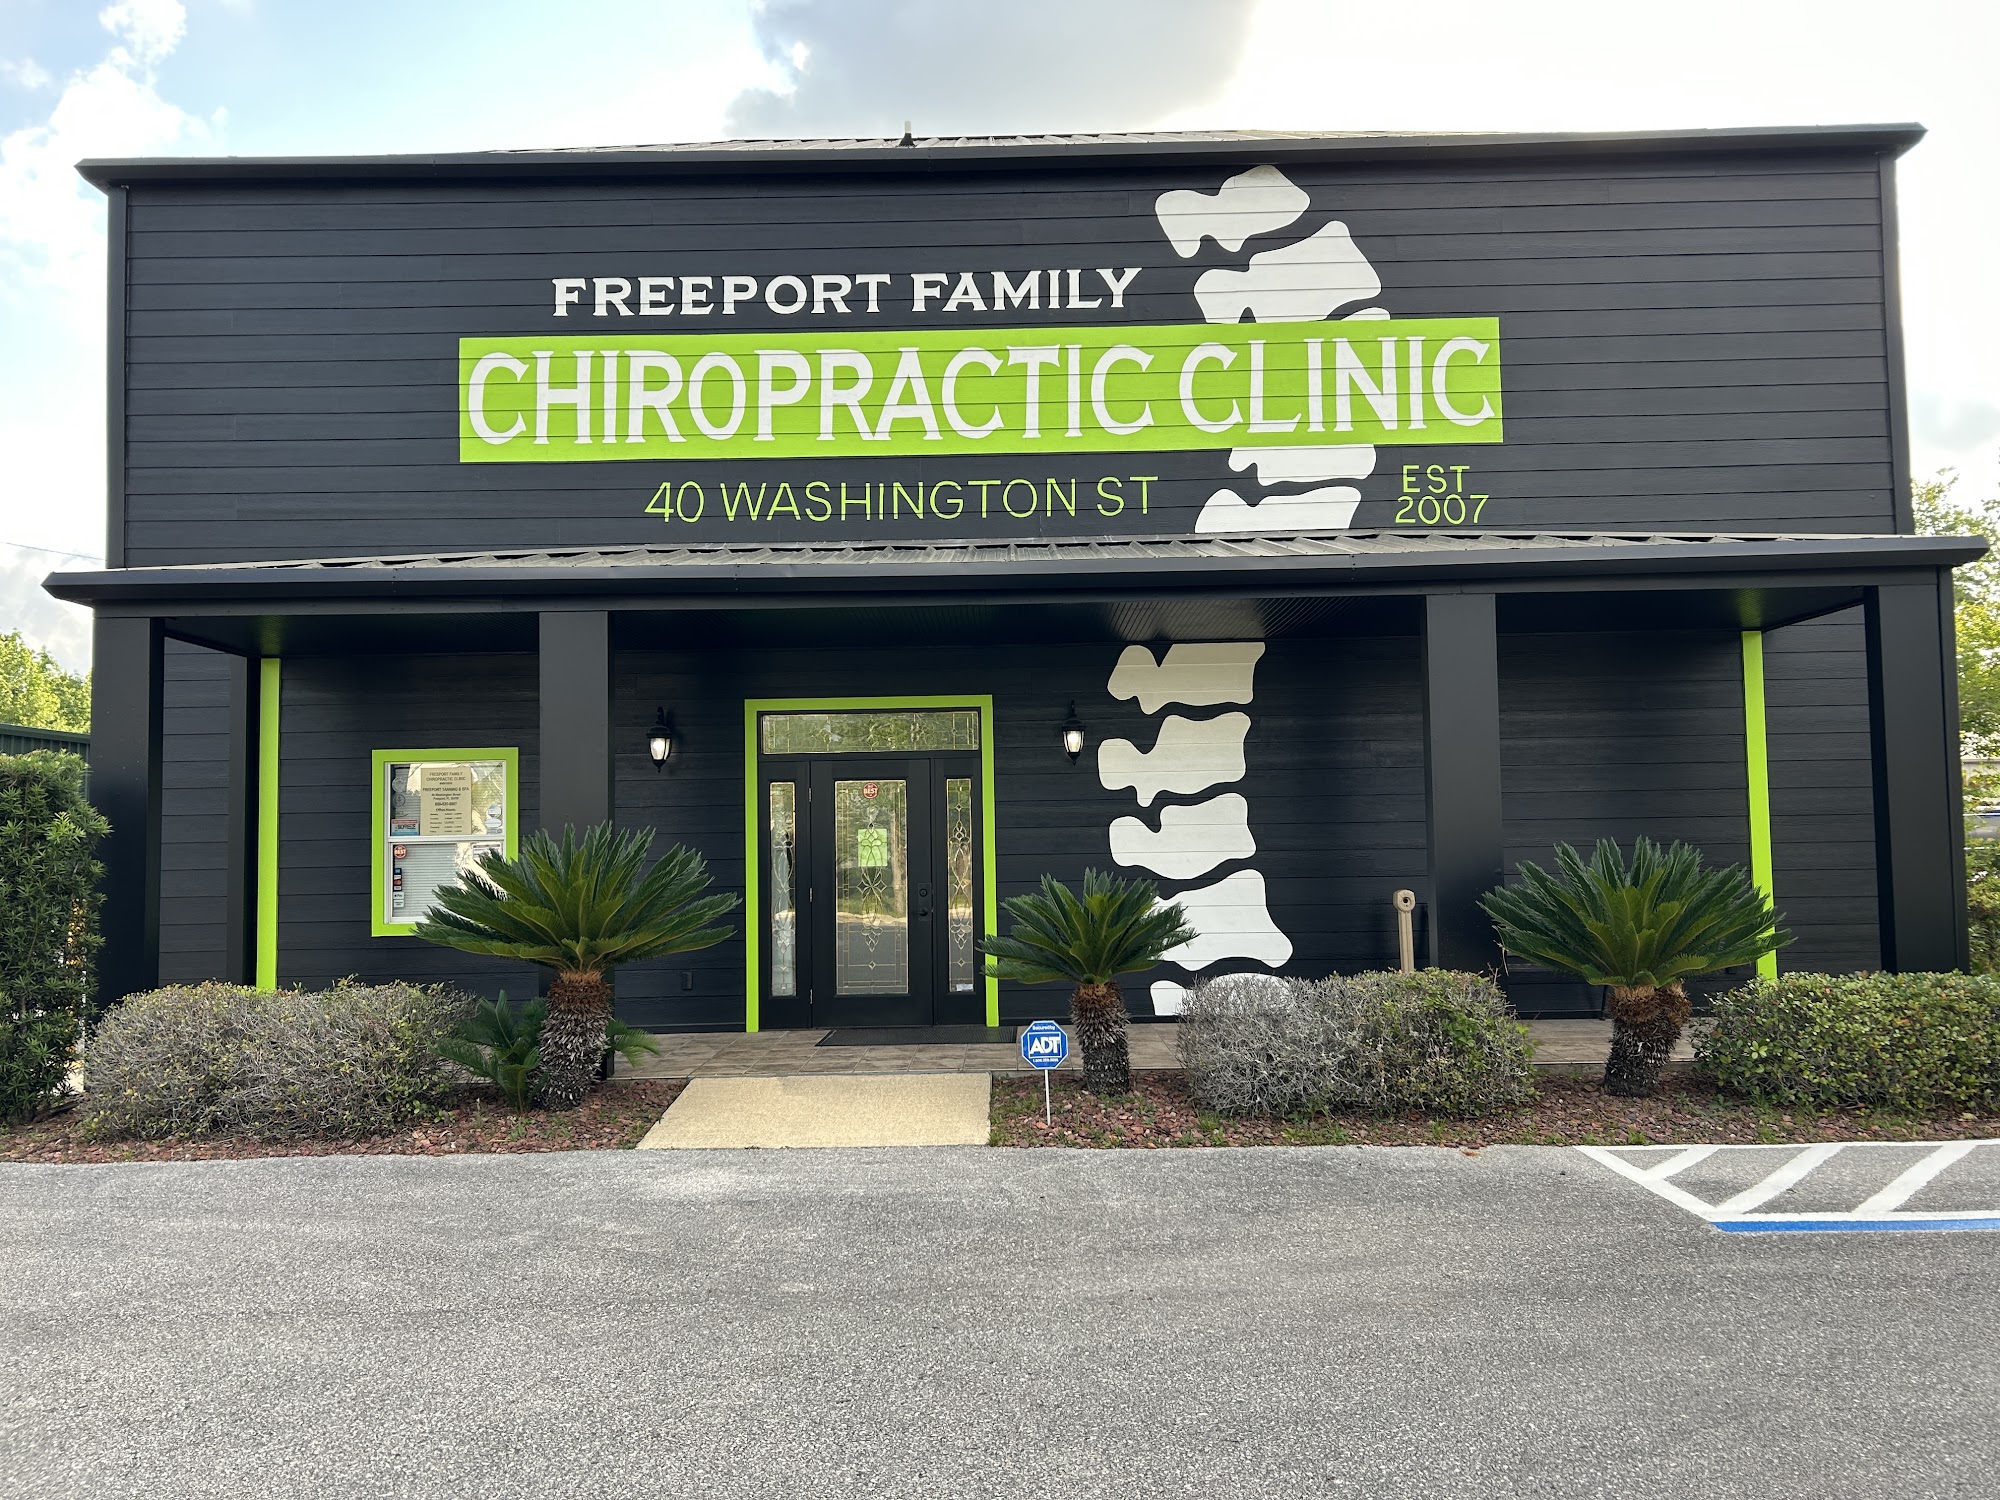 Freeport Family Chiropractic Clinic (MM19659) 40 Washington, Freeport Florida 32439